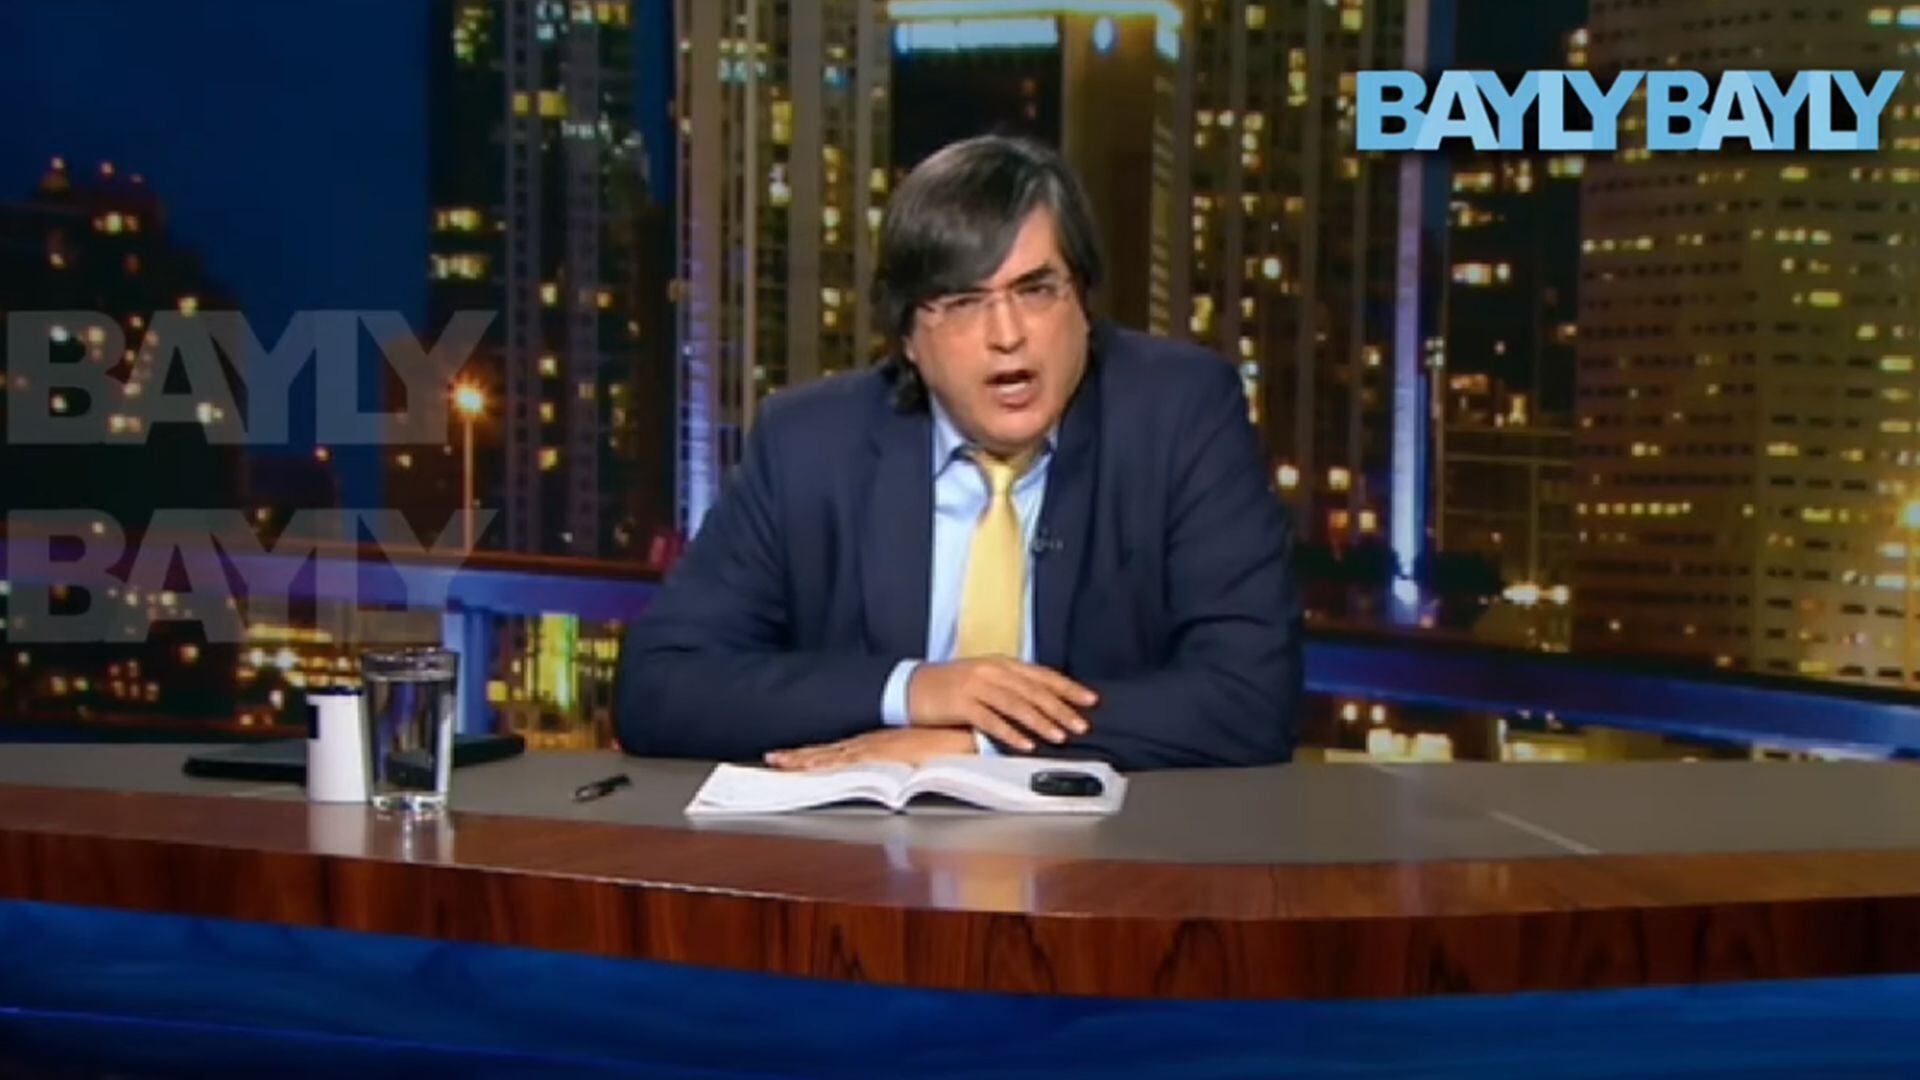 Jaime Bayly en su último programa emitido desde Miami donde vinculó a Evo Morales con el Cartel de Sinaloa (Bayly TV)